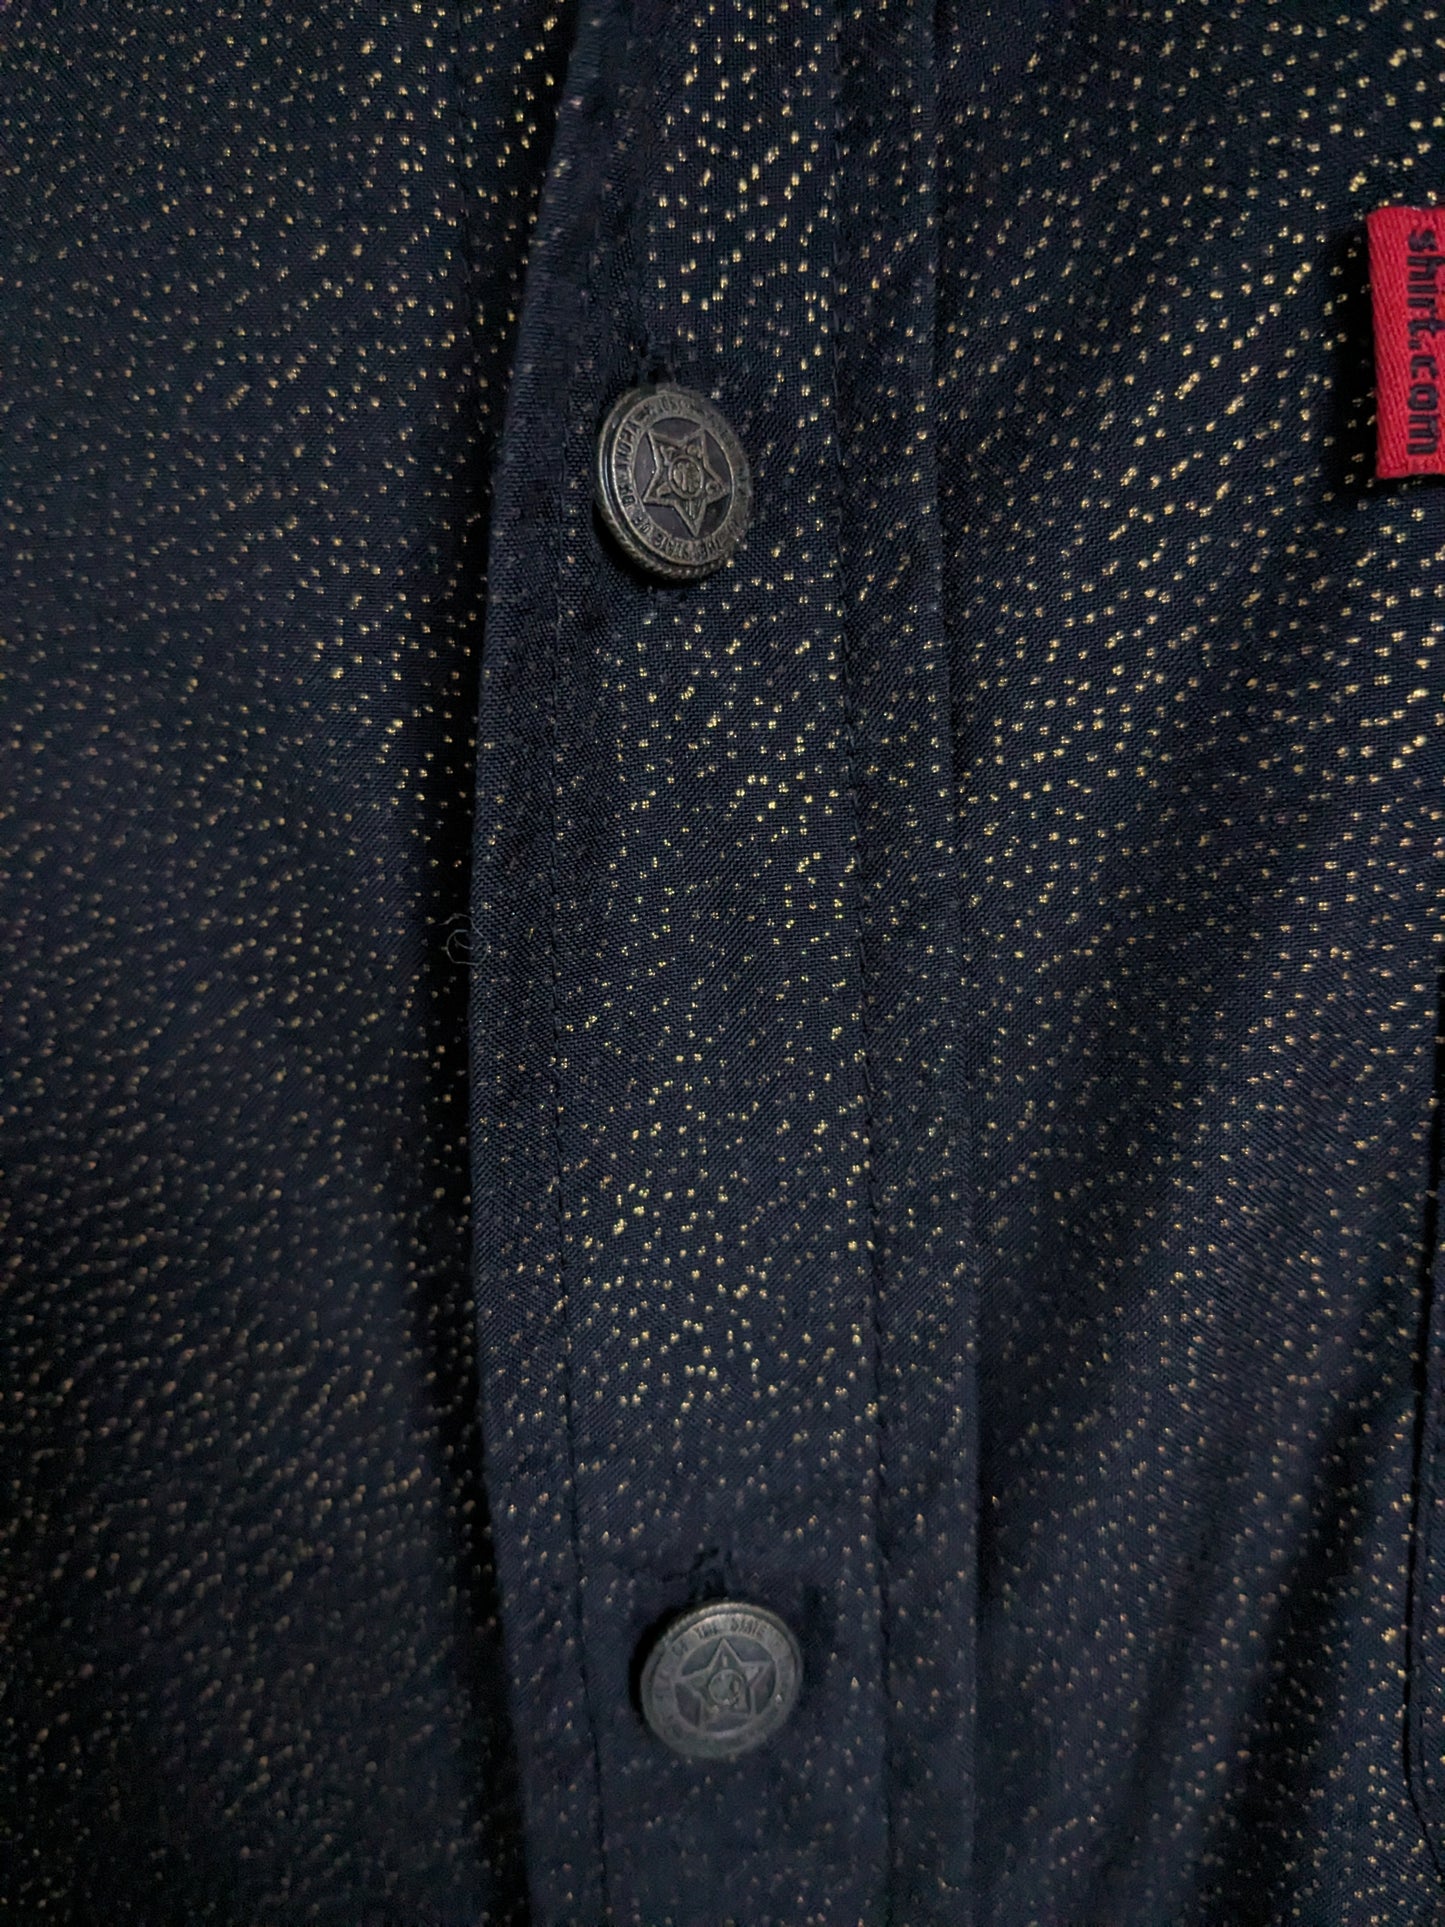 Shirt.com Shirt short sleeve. Black gold -colored dotted. Nice buttons. Size XXL / 2XL.